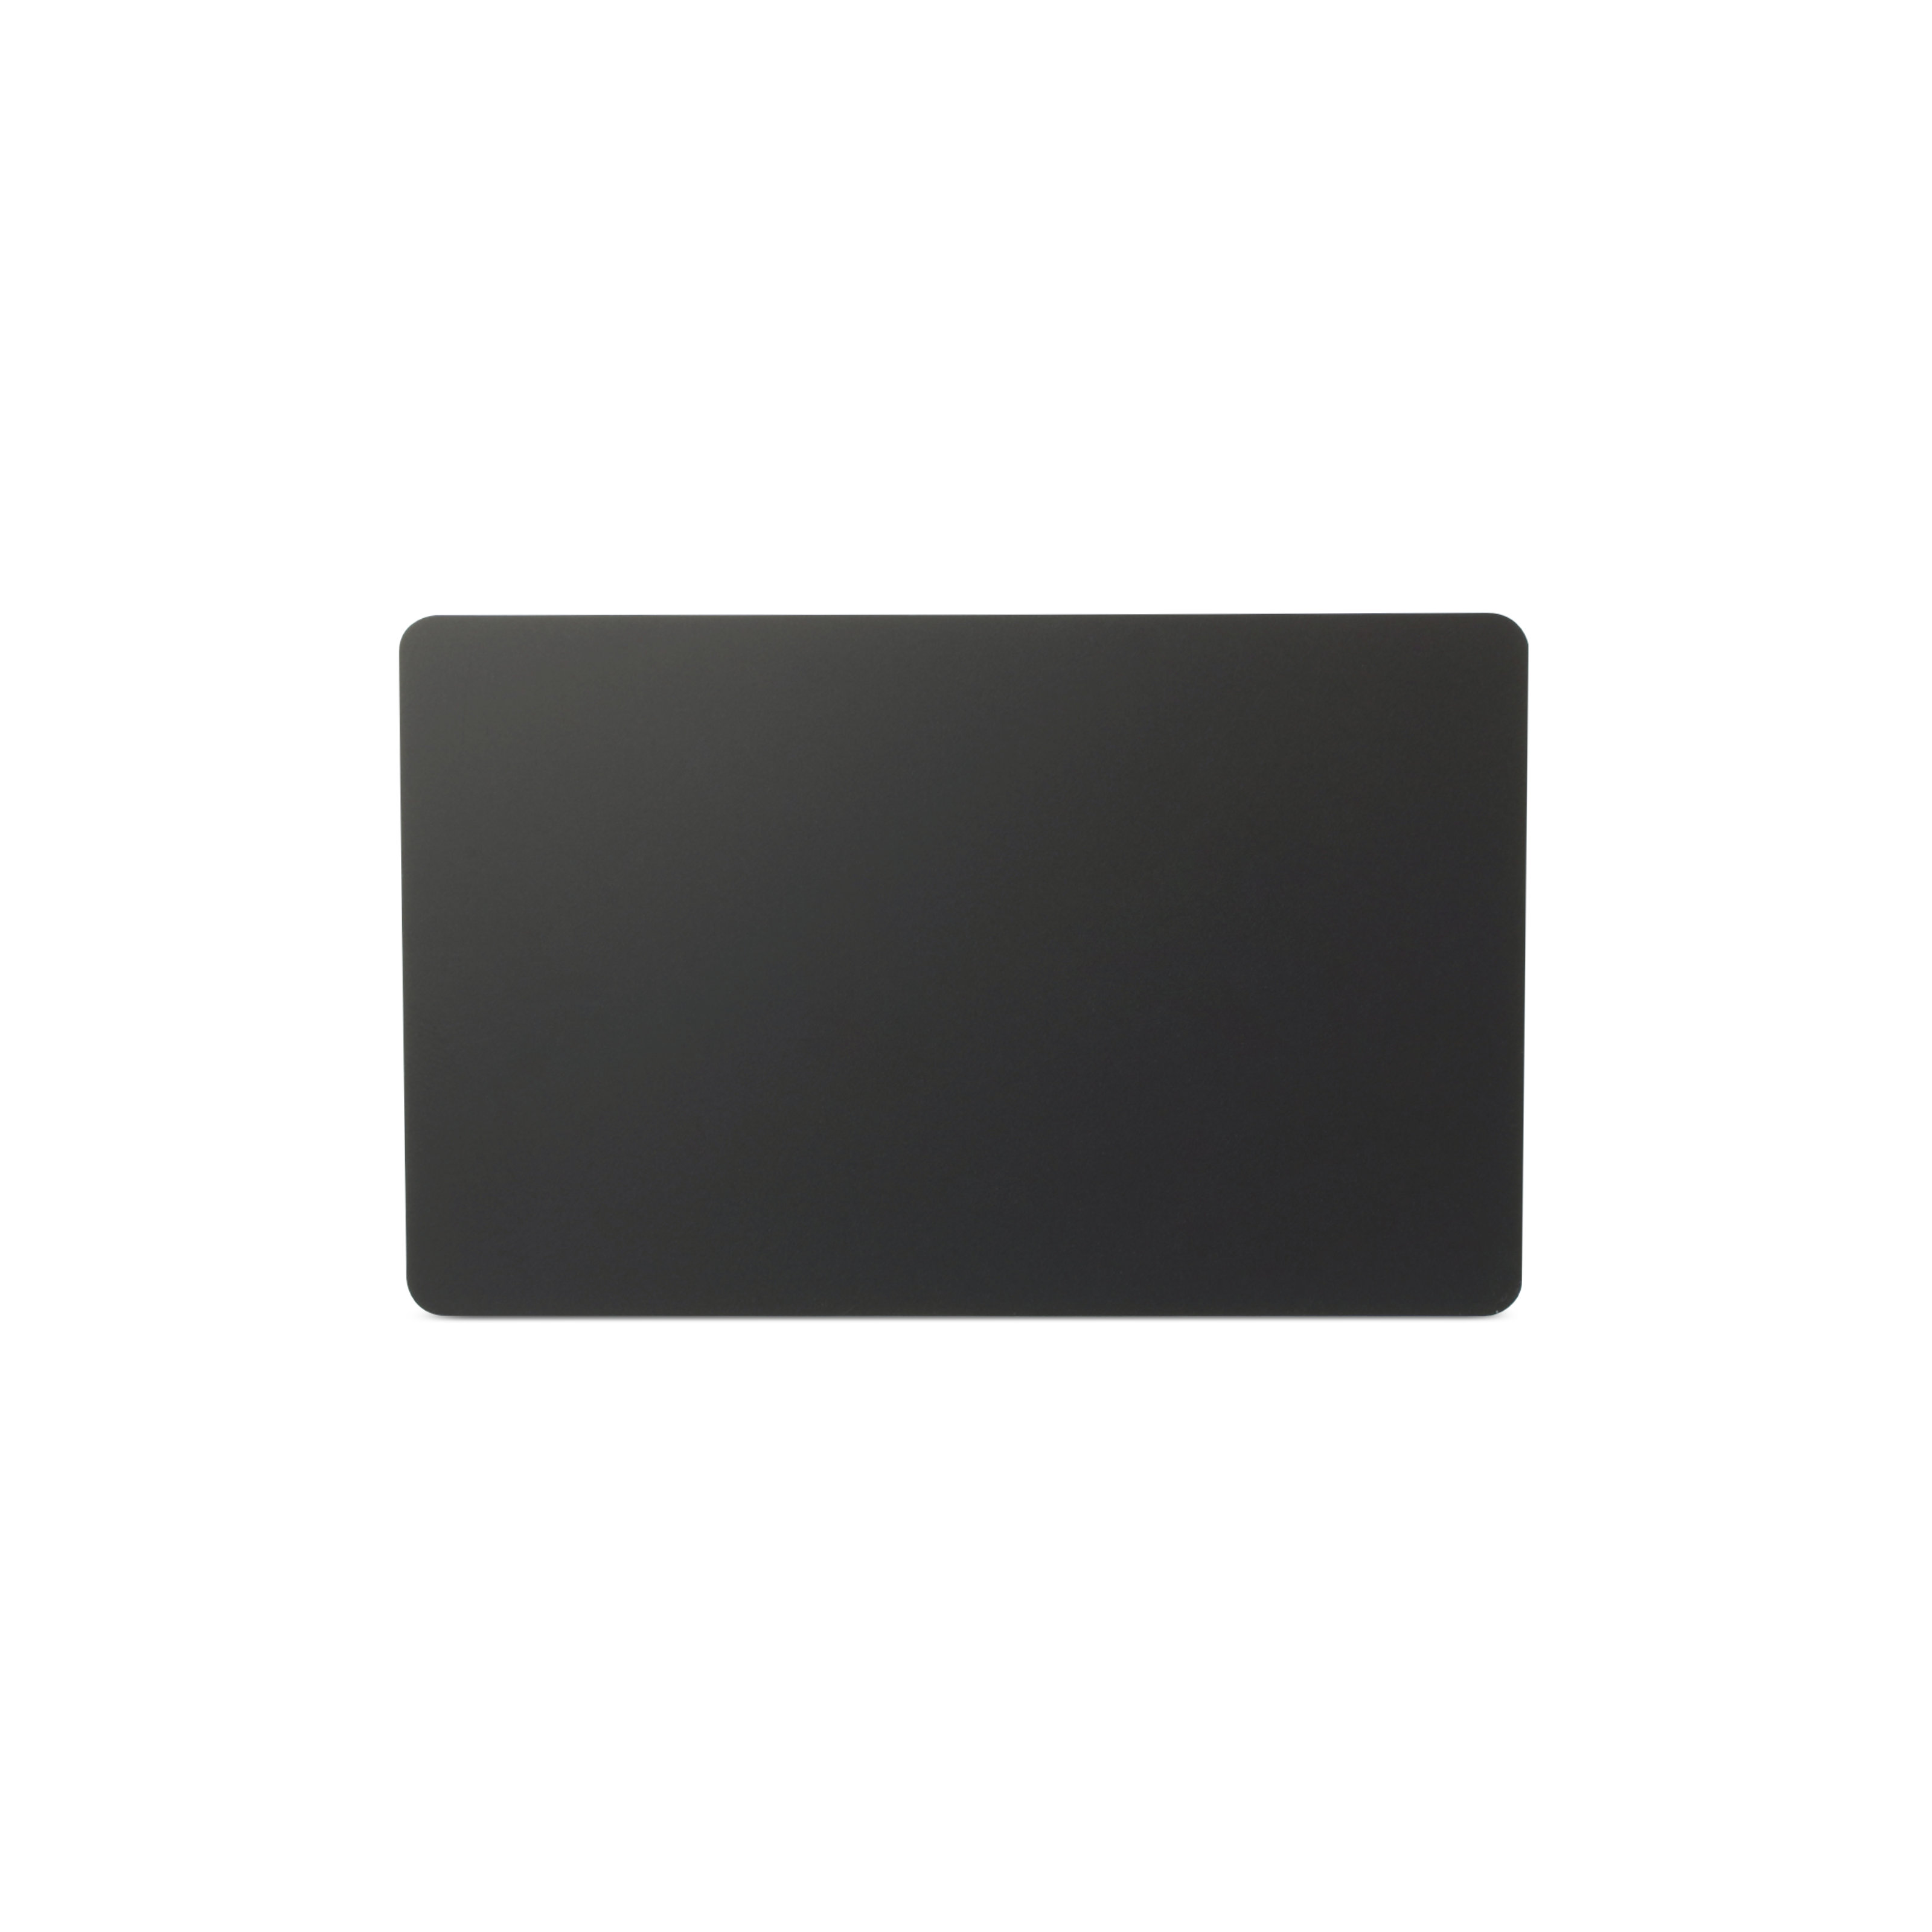 Schwarze NFC Karte aus PVC